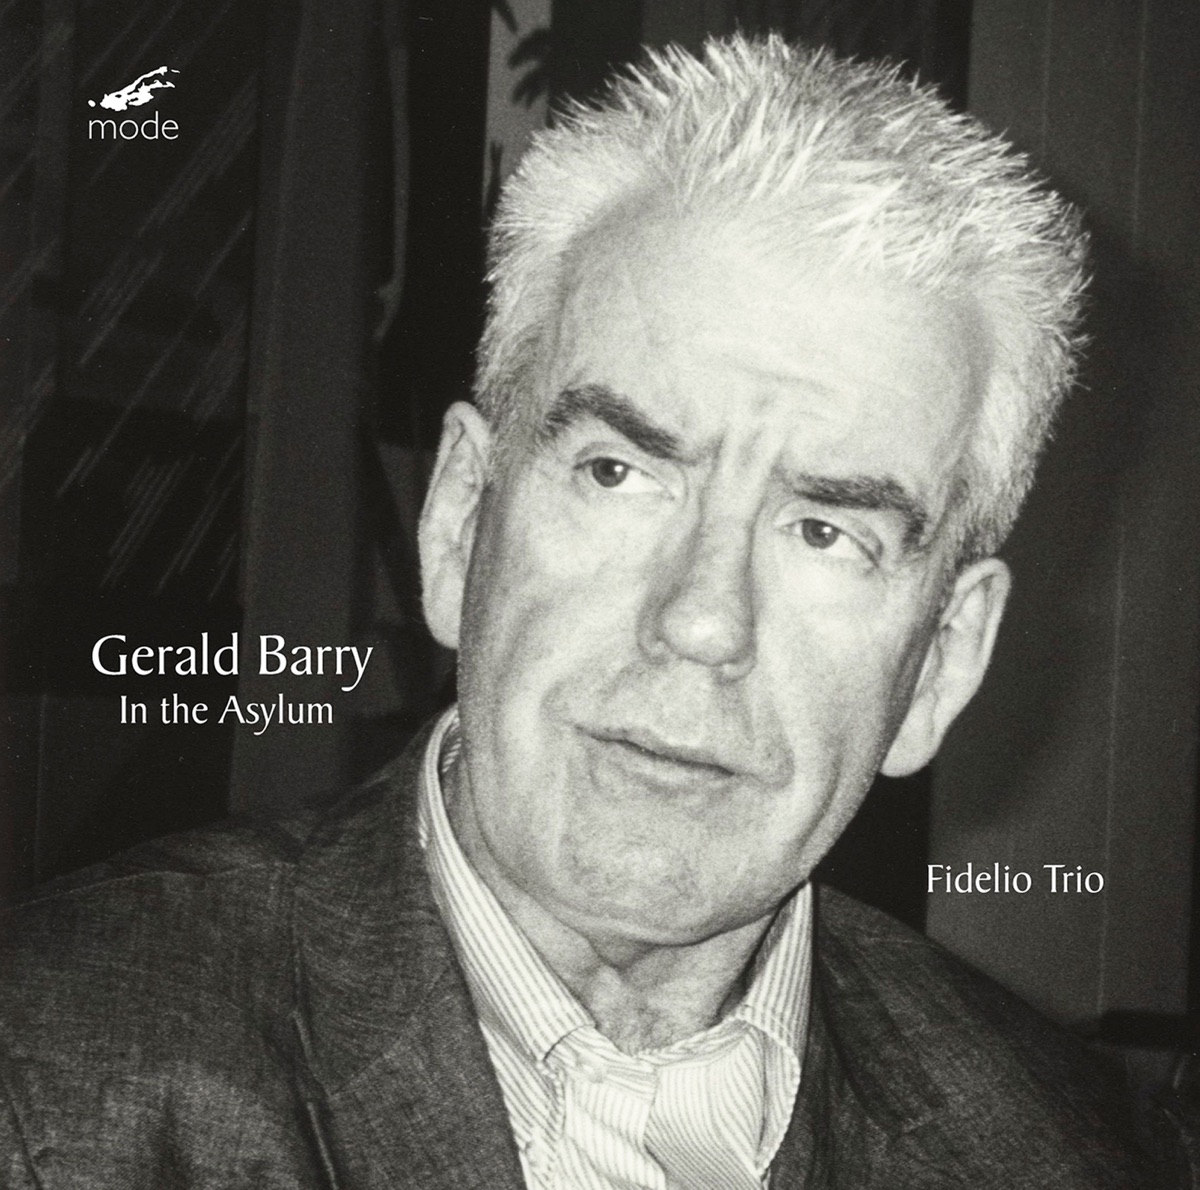 Gerald Barry: in the Asylum by Fidelio Trio on Apple Music